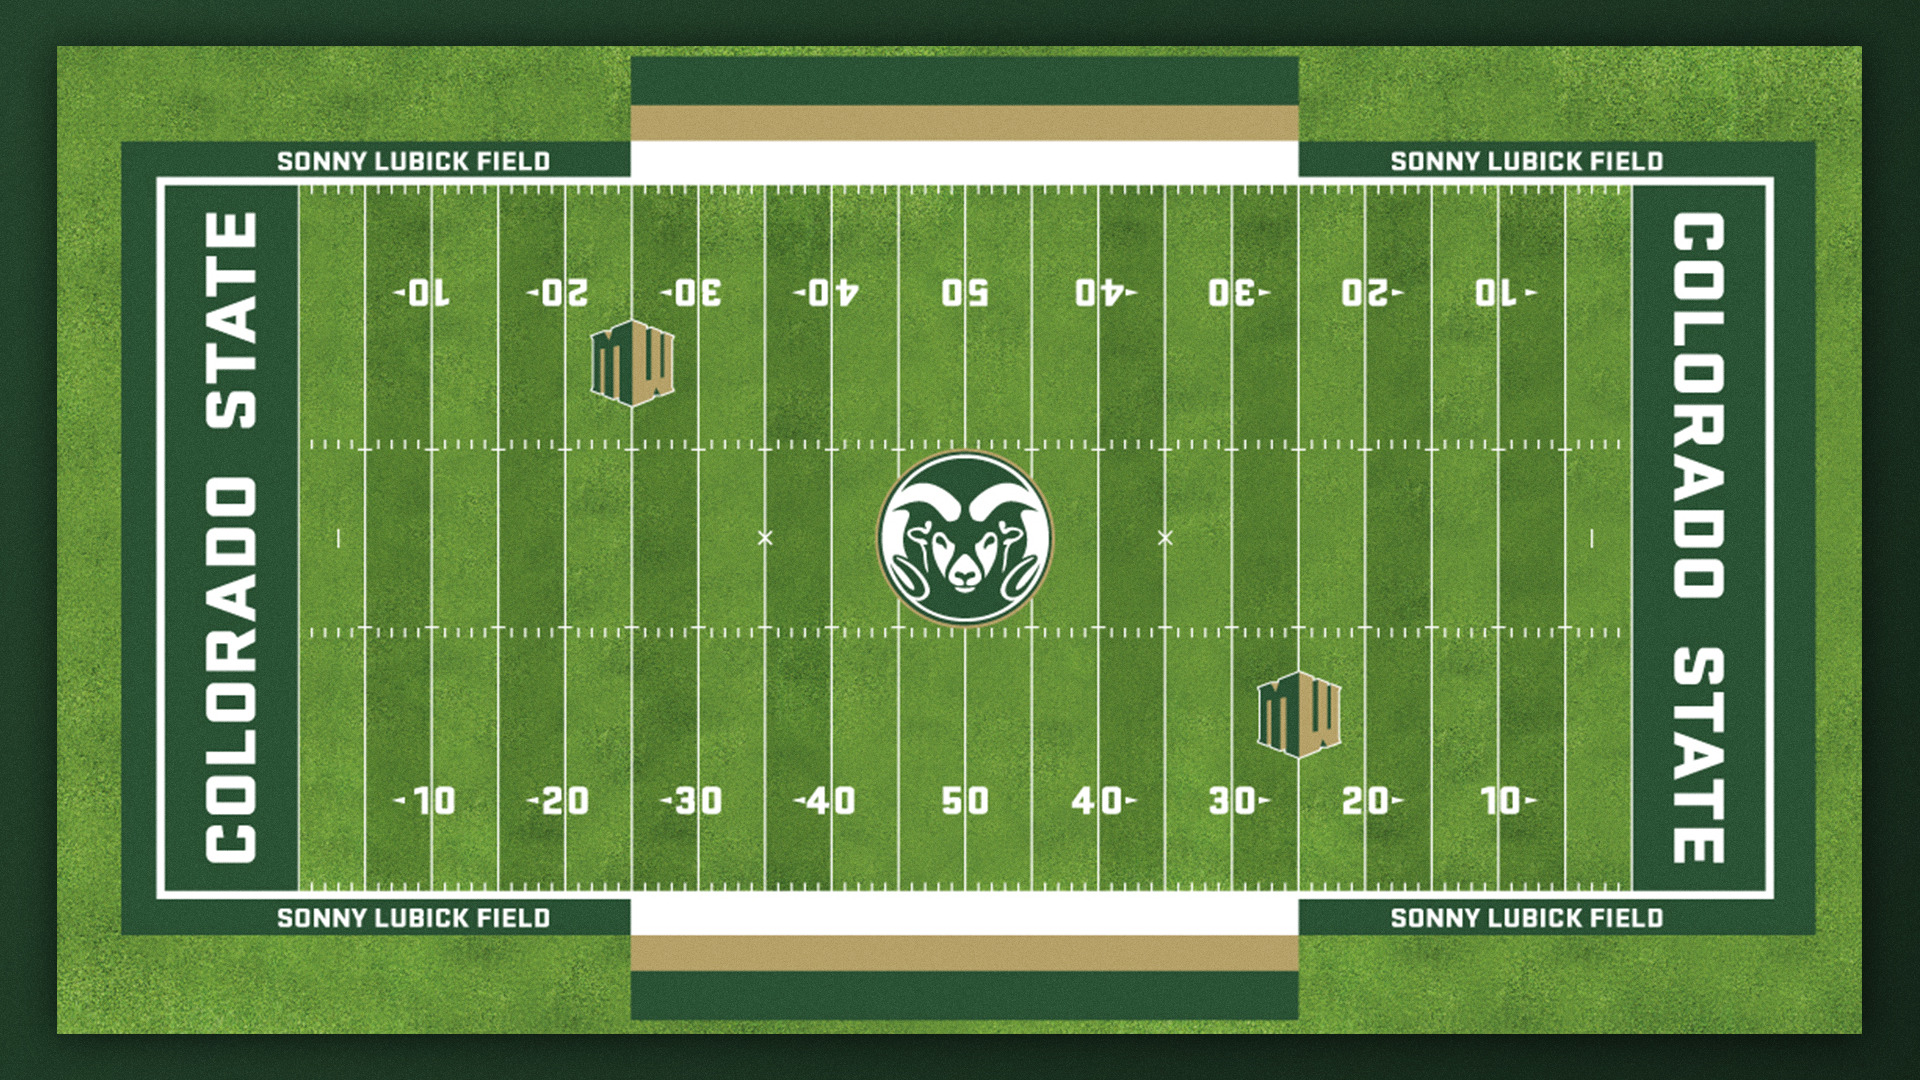 Colorado State Unveils Field Design for New Stadium - Football Stadium